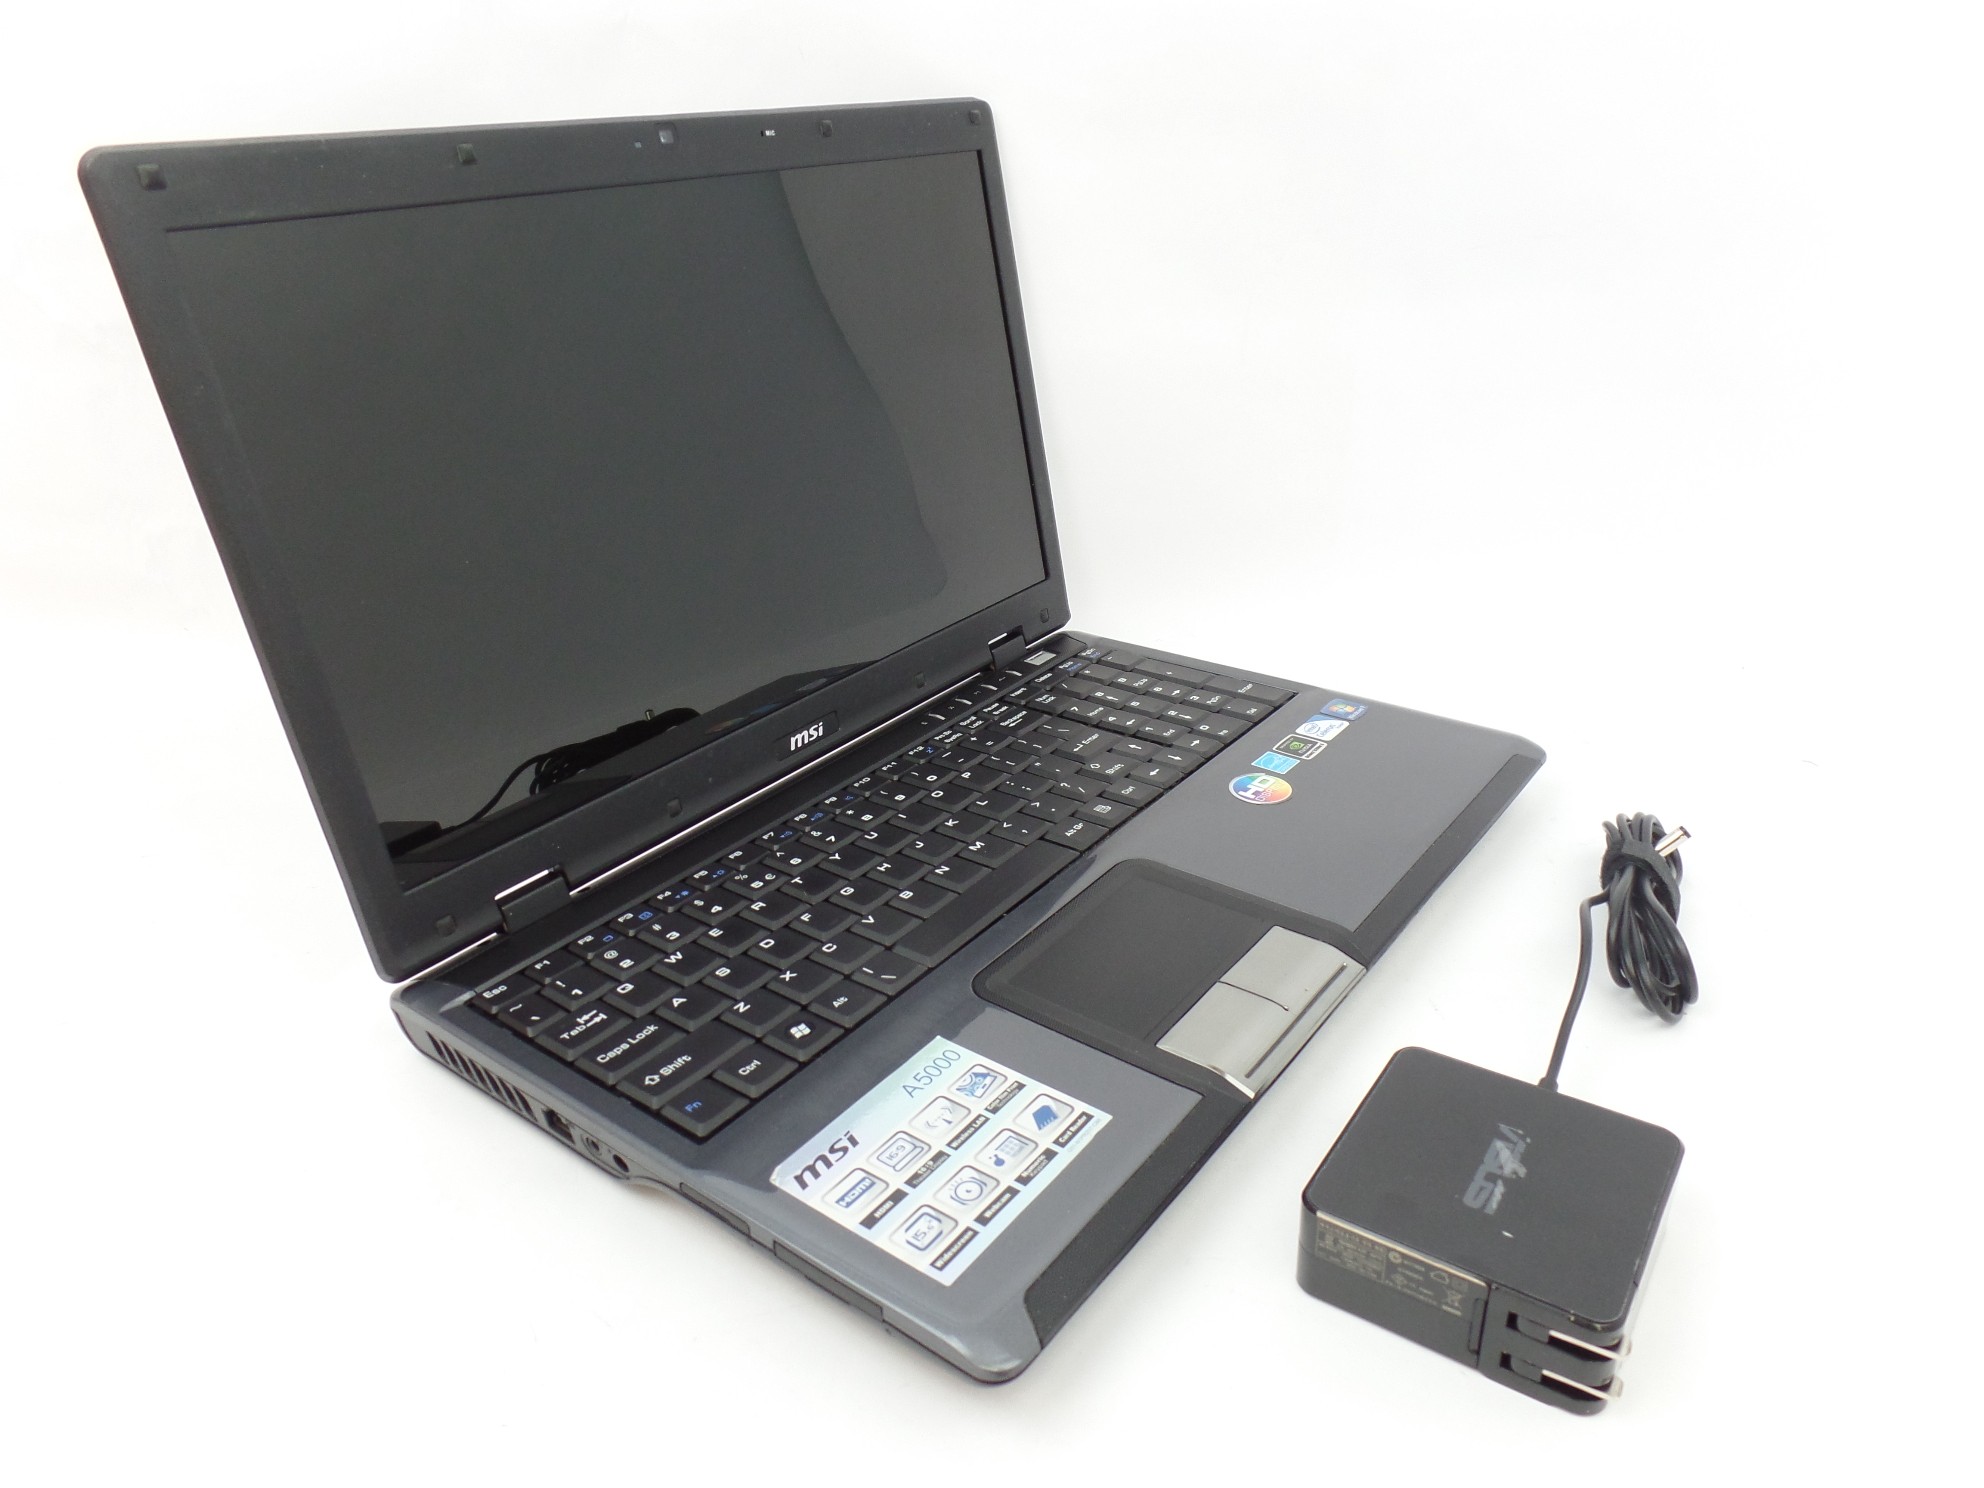 MSI A5000-025US 15.6" HD Celeron T3000 1.8GHz 3GB 250GB GeForce 8200MG Laptop W7